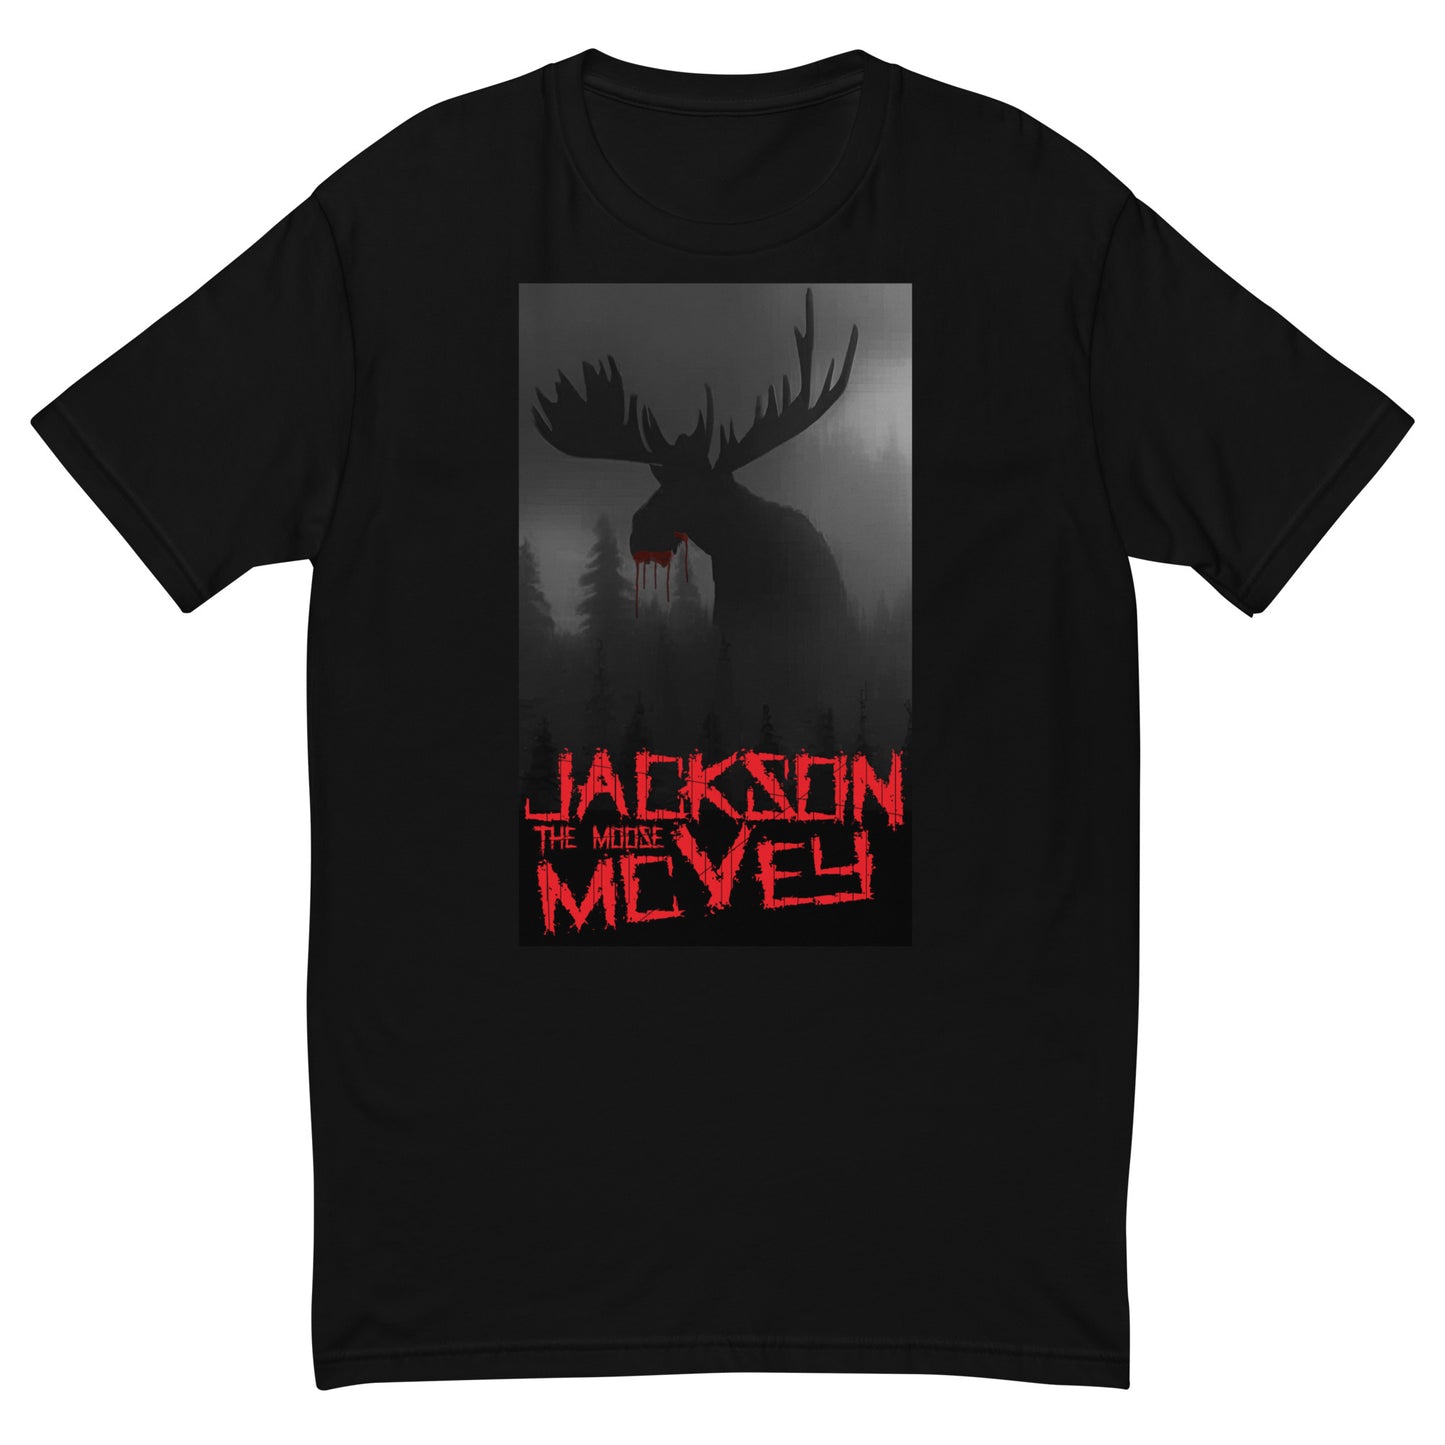 Metal Moose T-shirt - ADULT UNISEX